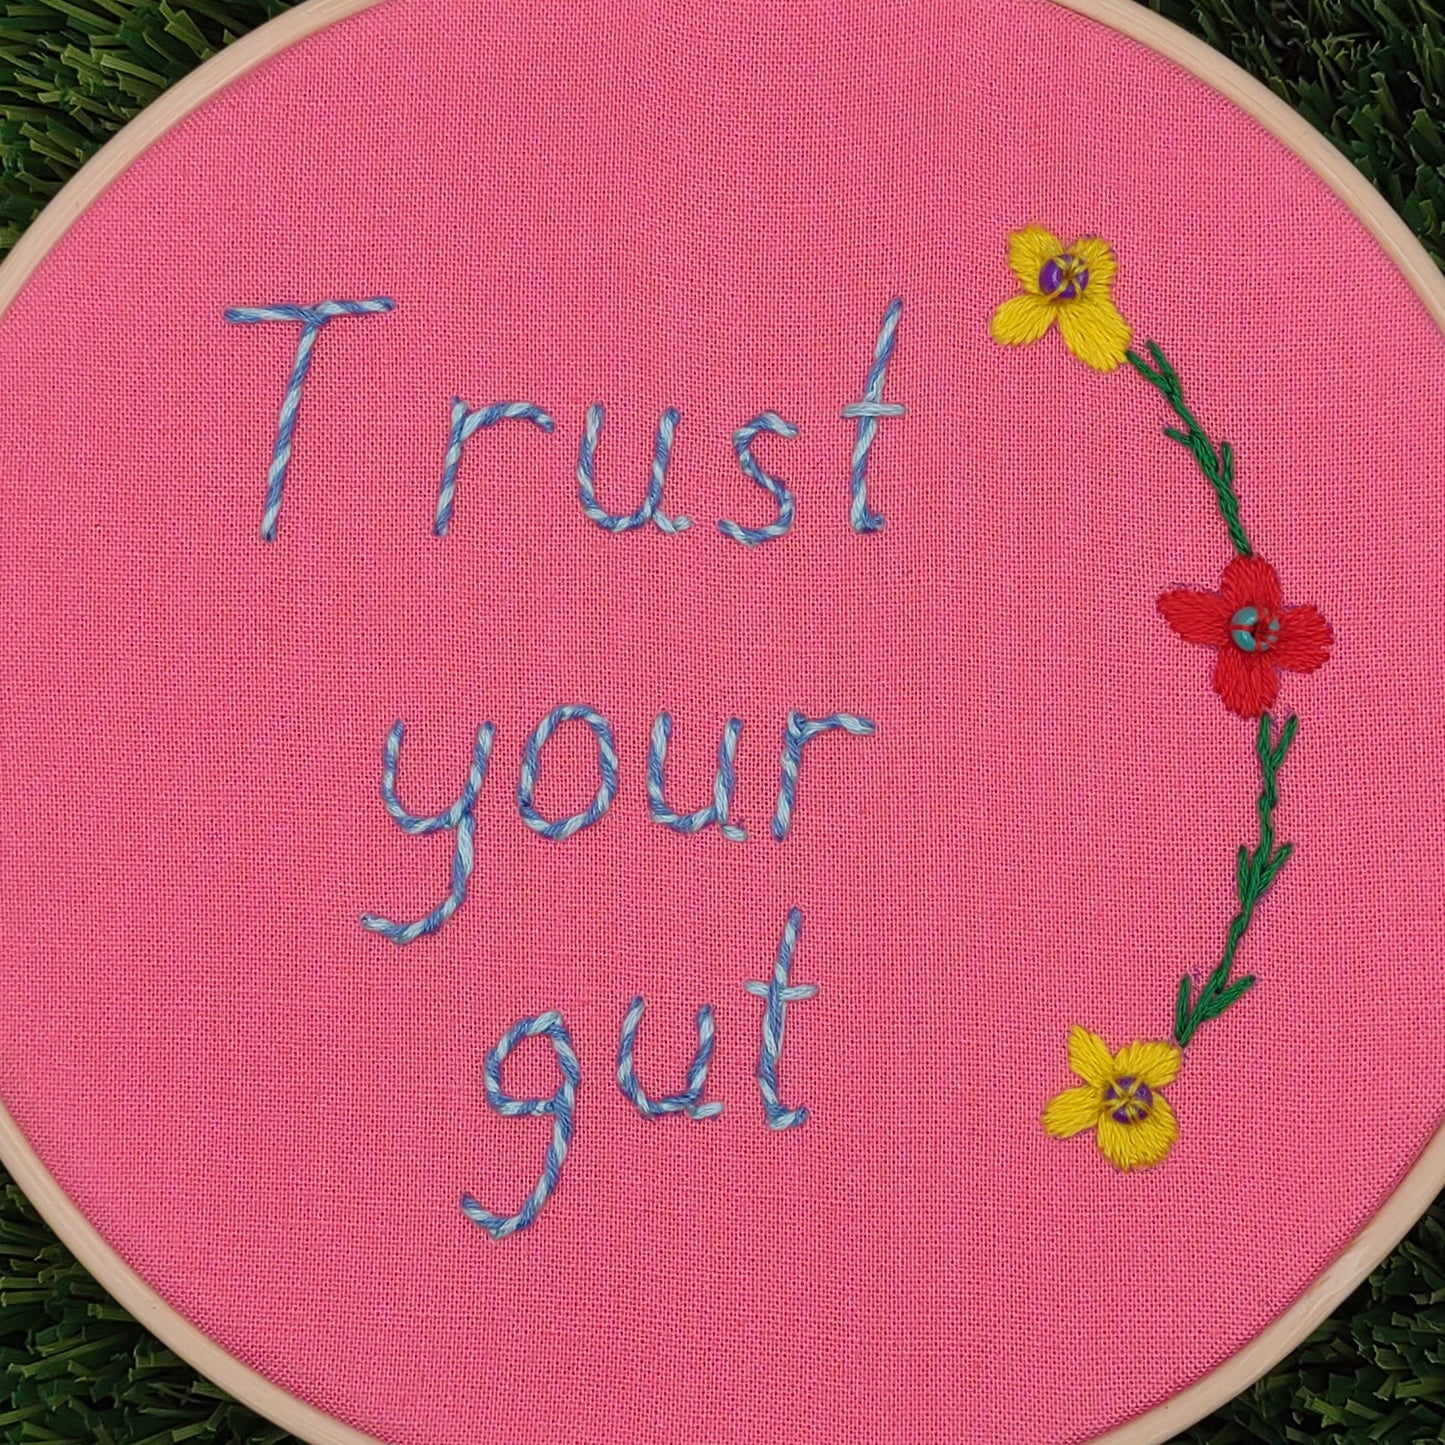 "Trust your gut" Handmade Embroidery 6 inch hoop